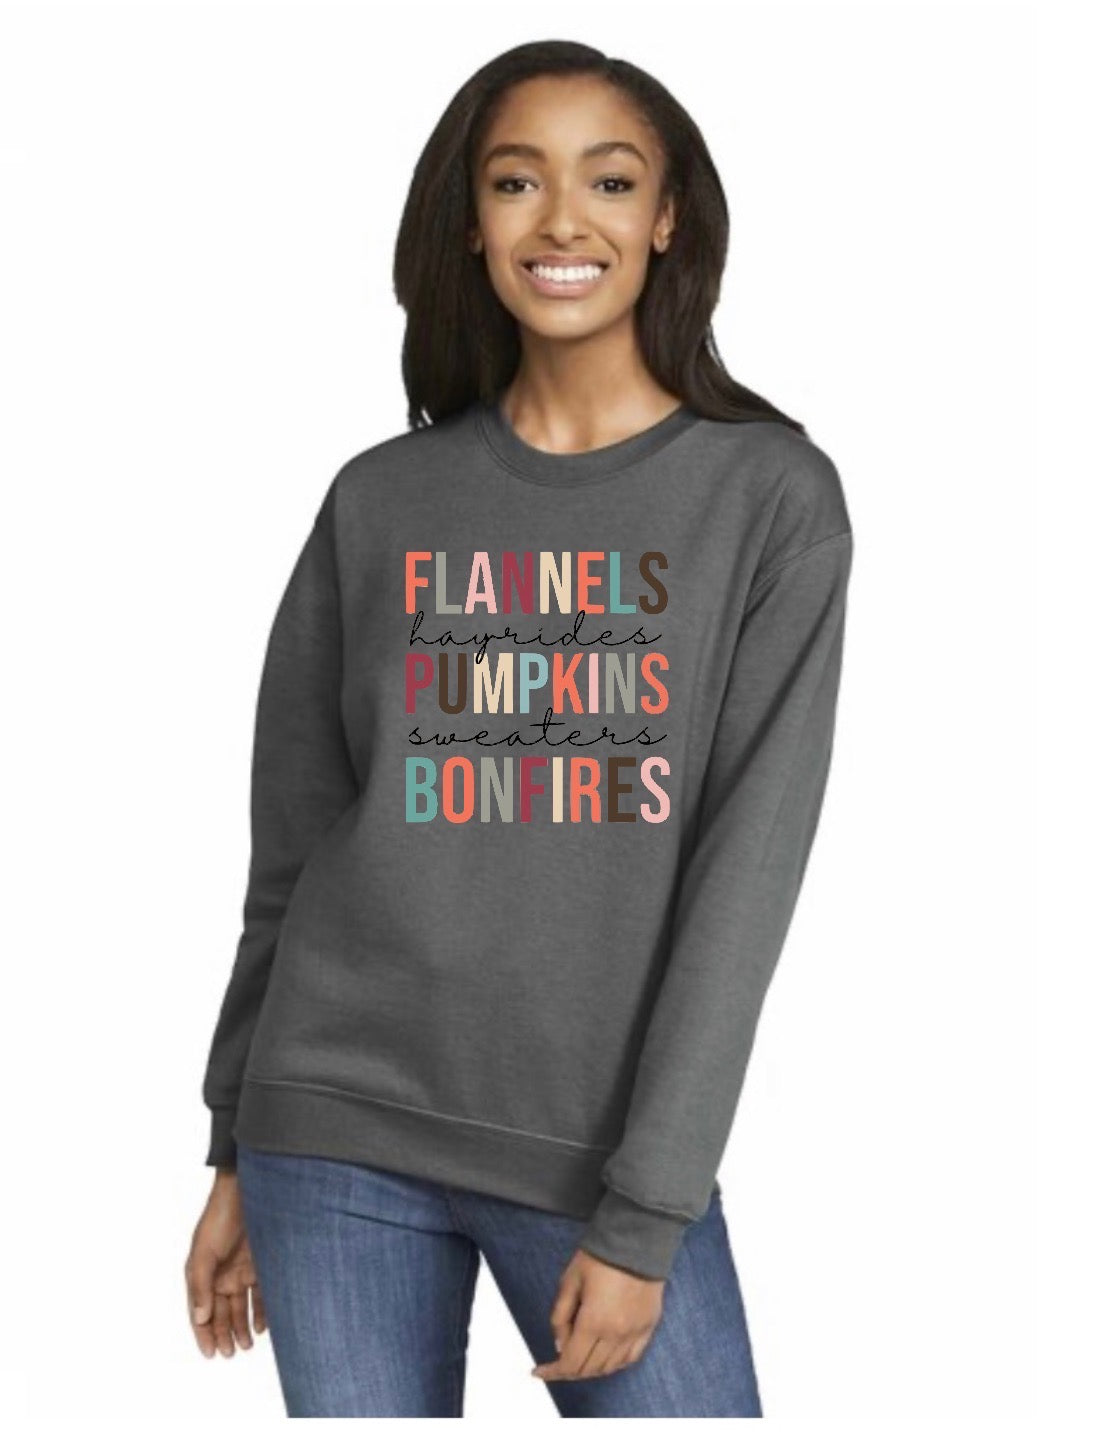 Flannels, Hayrides, Pumpkins, Sweaters & Bonfires